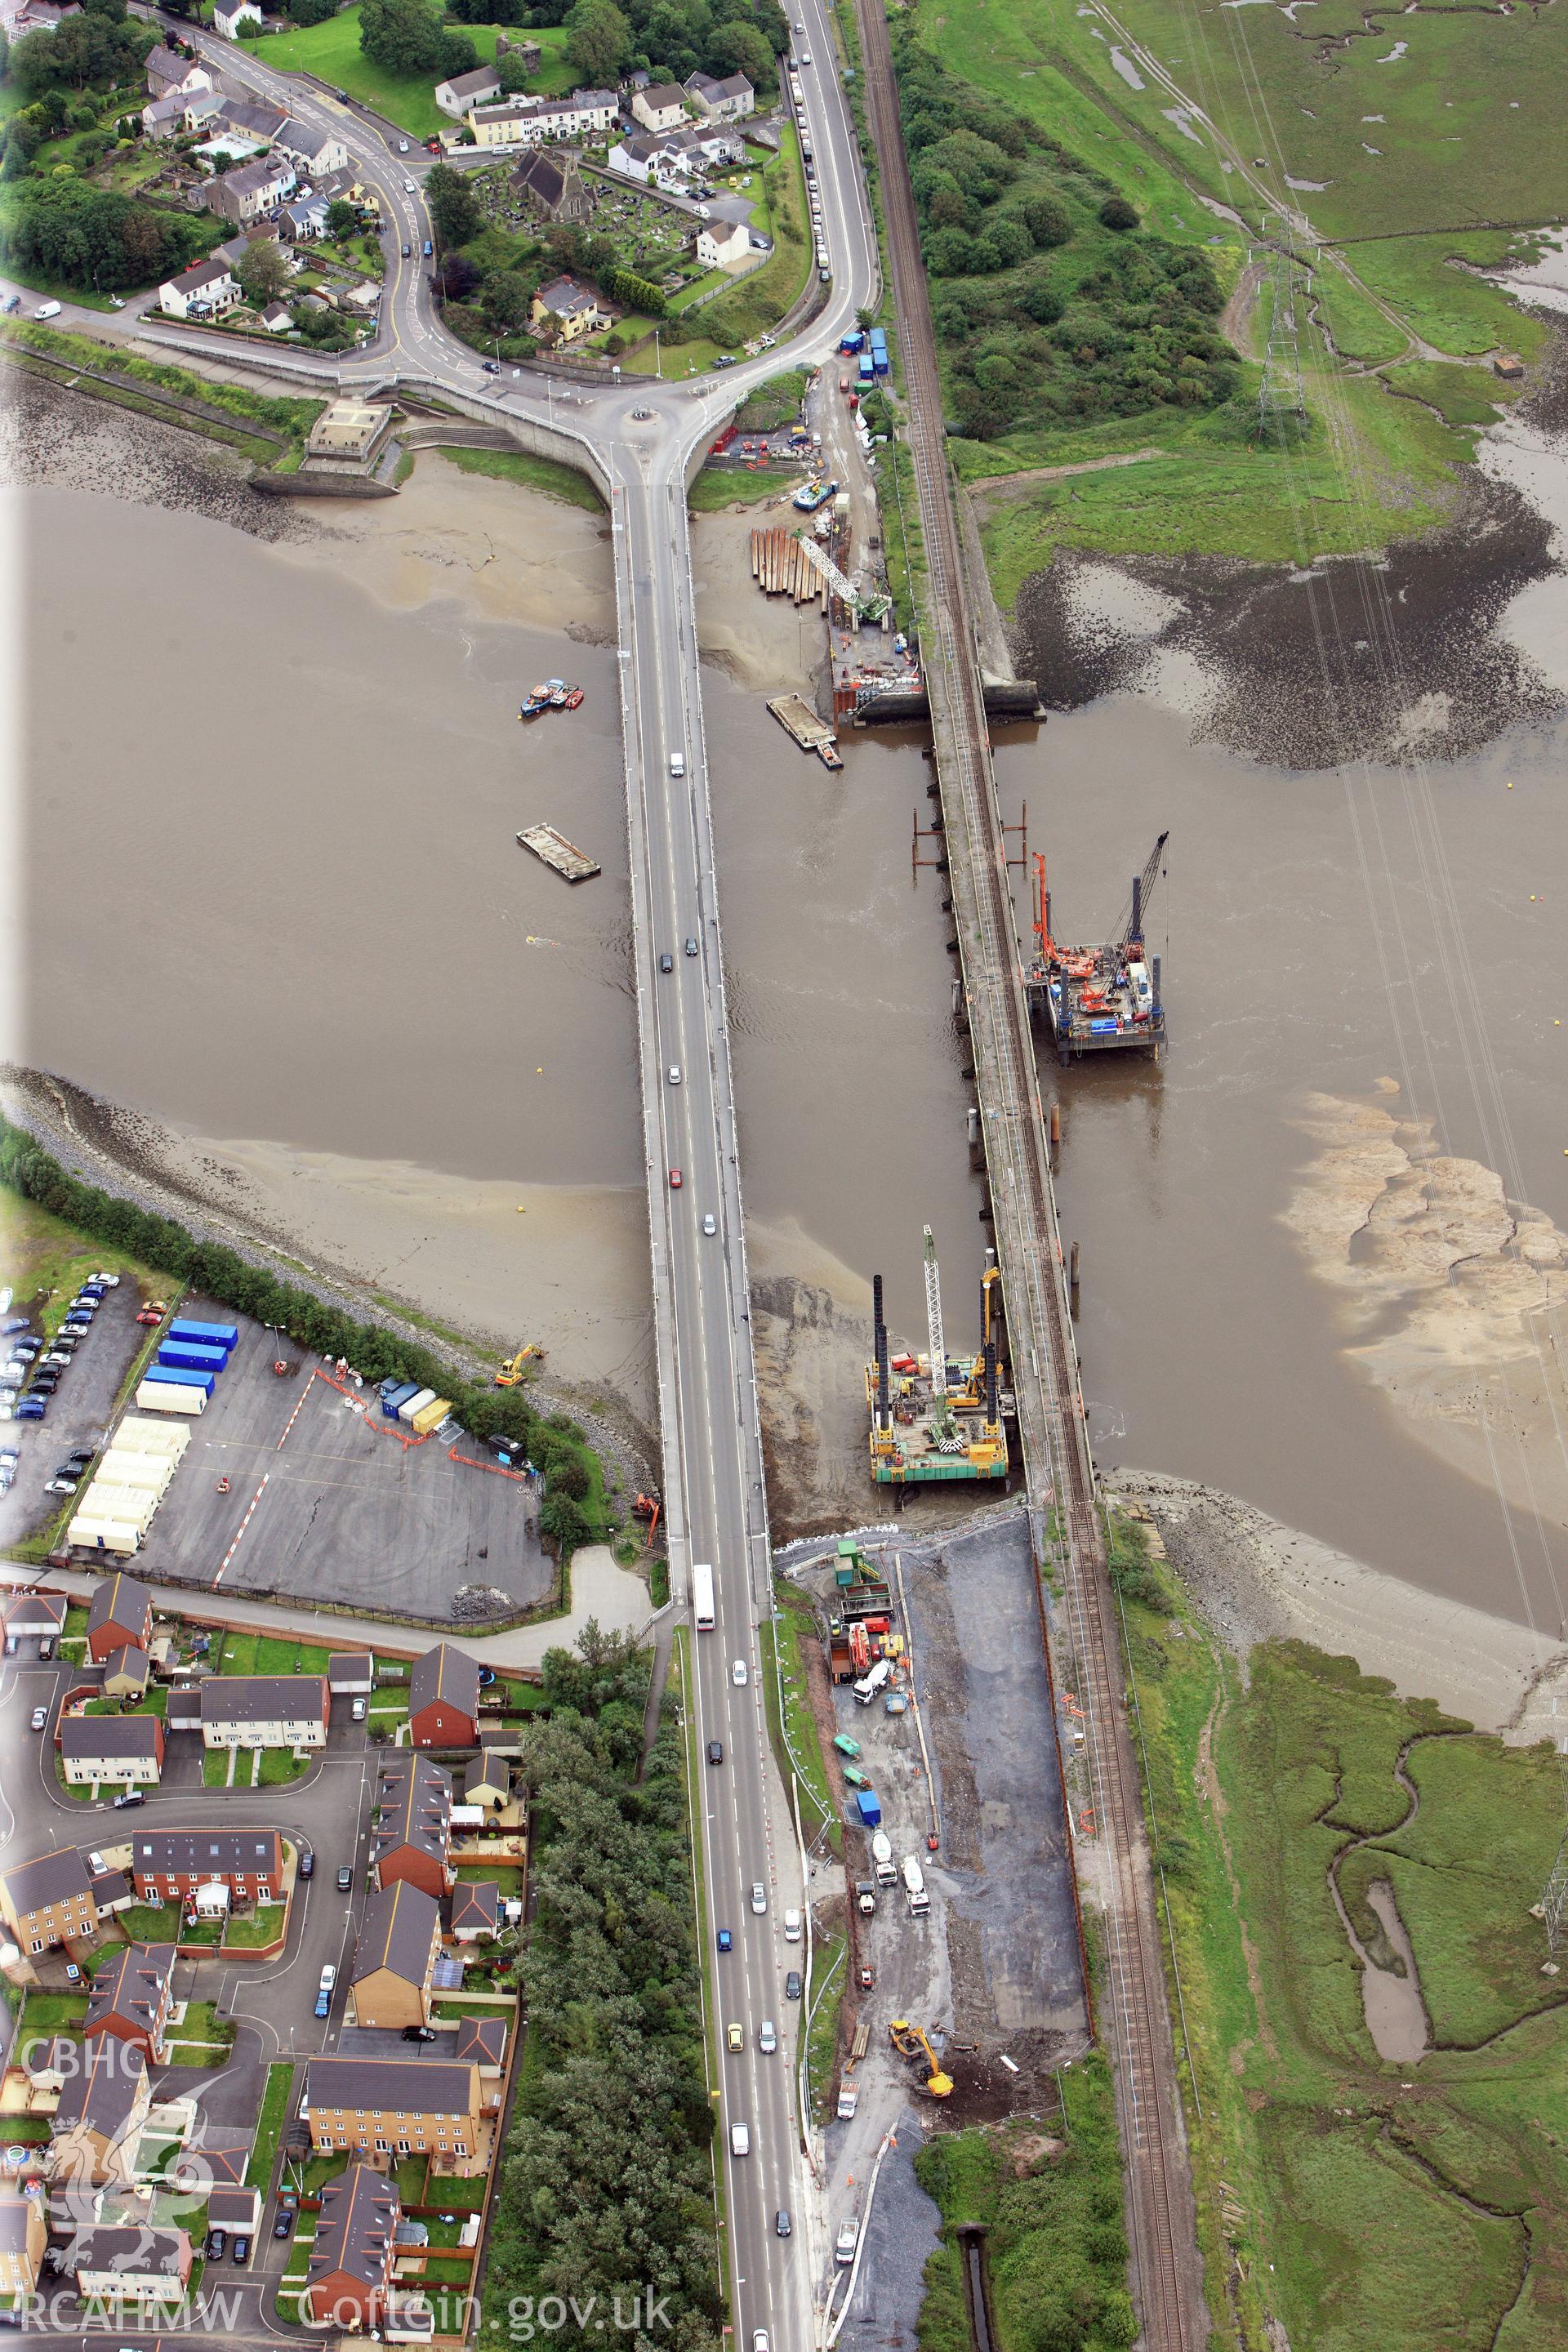 RCAHMW colour oblique photograph of Loughur Viaduct. Taken by Toby Driver on 05/07/2012.